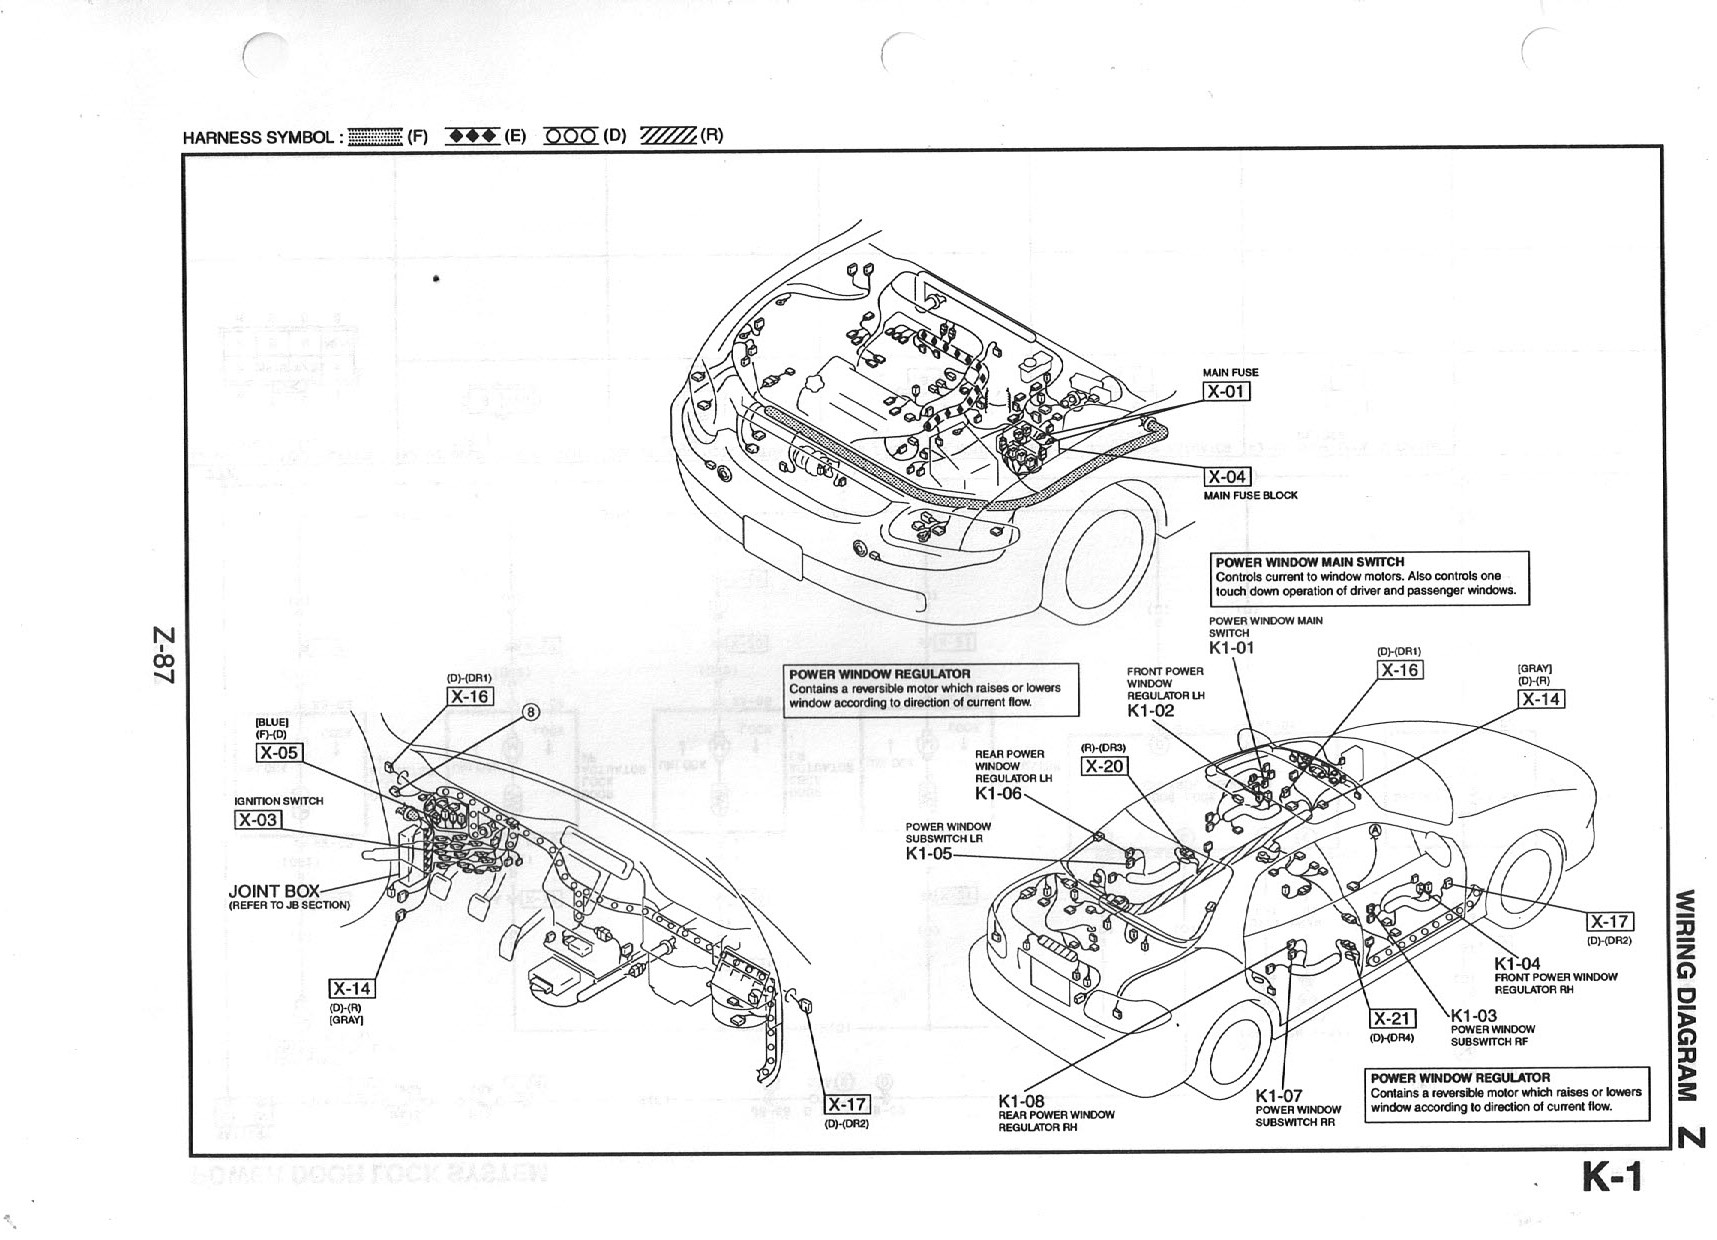 PMX626.info //US/Mazda 626 & MX-6/Work Shop Manuals/Scans/2001 Wiring